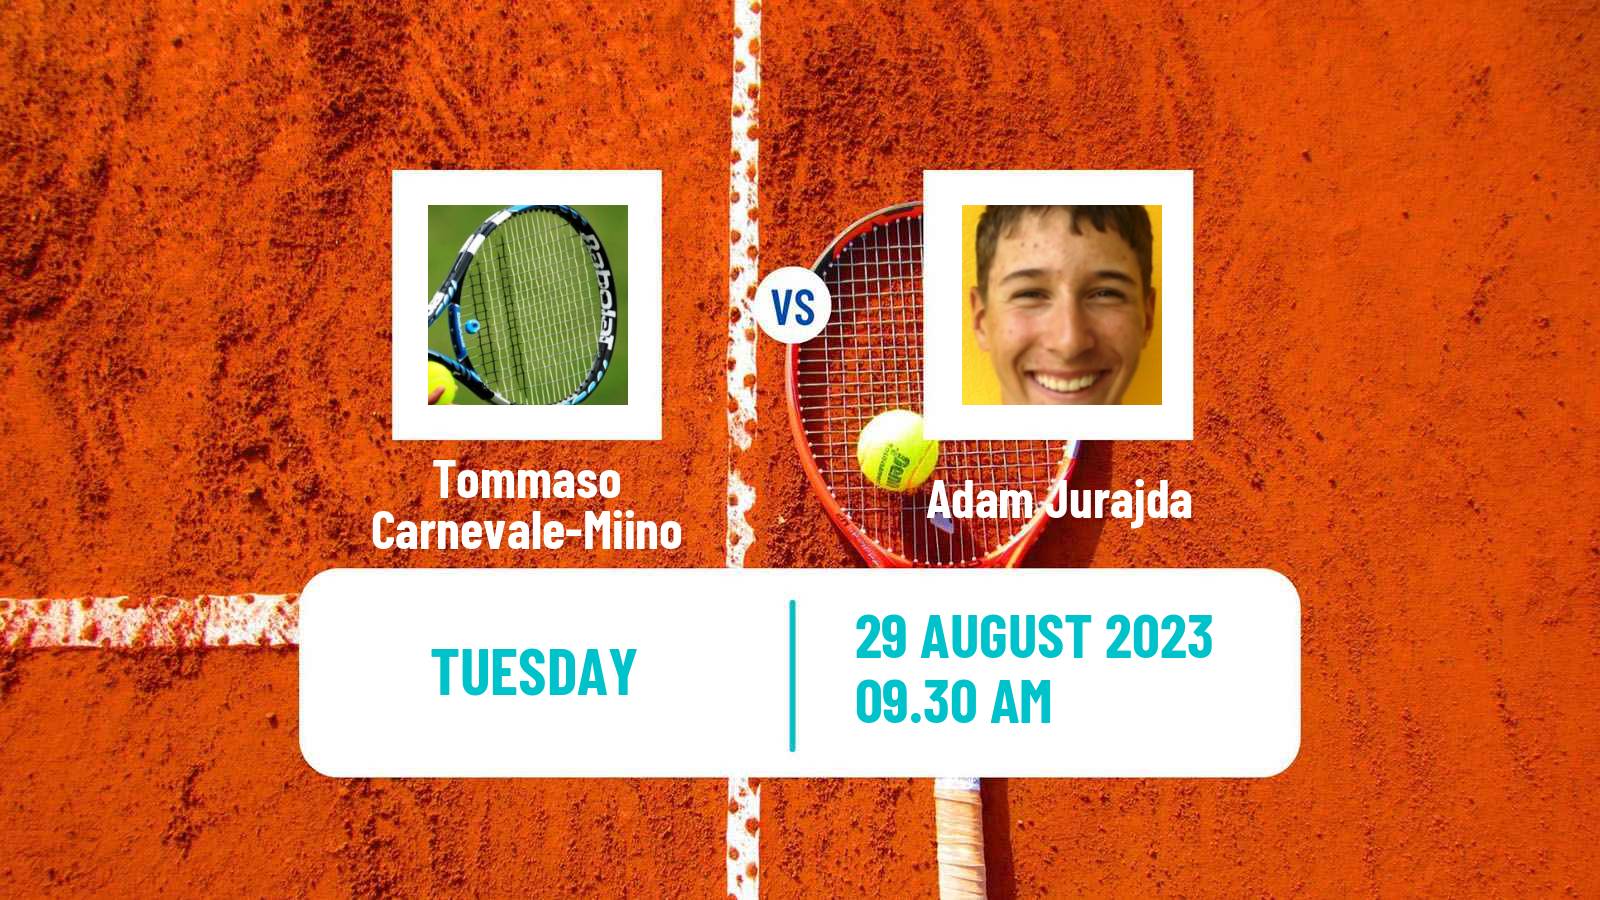 Tennis ITF M25 Jablonec Nad Nisou 2 Men Tommaso Carnevale-Miino - Adam Jurajda